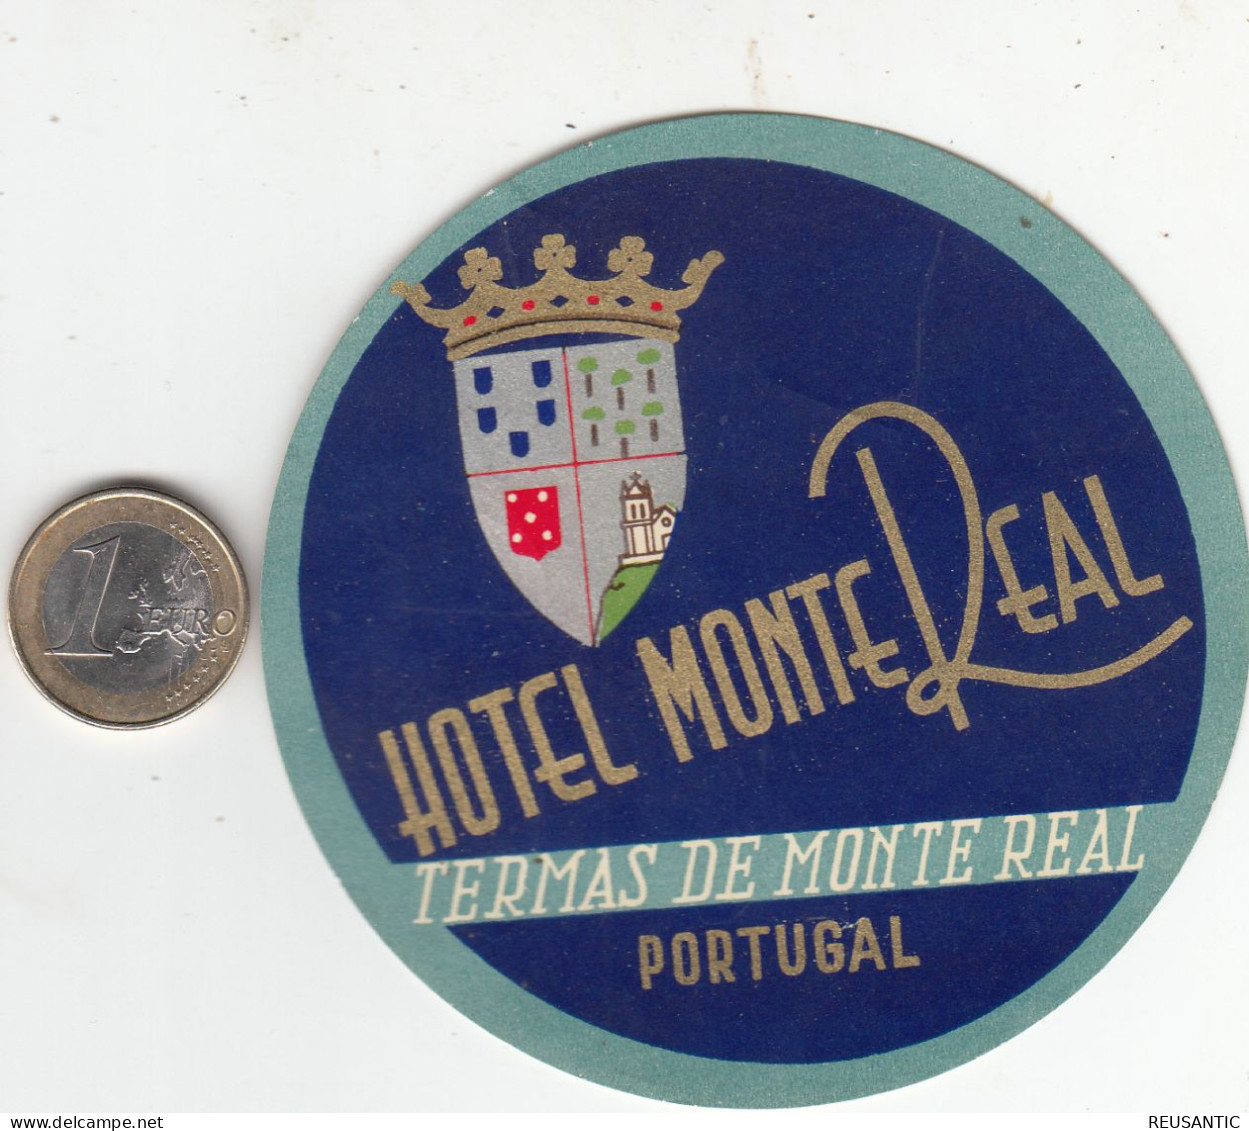 ETIQUETA - STICKER - LUGGAGE LABEL PORTUGAL  HOTEL MONTE REAL EN TERMAS DE MONTE REAL - Hotel Labels